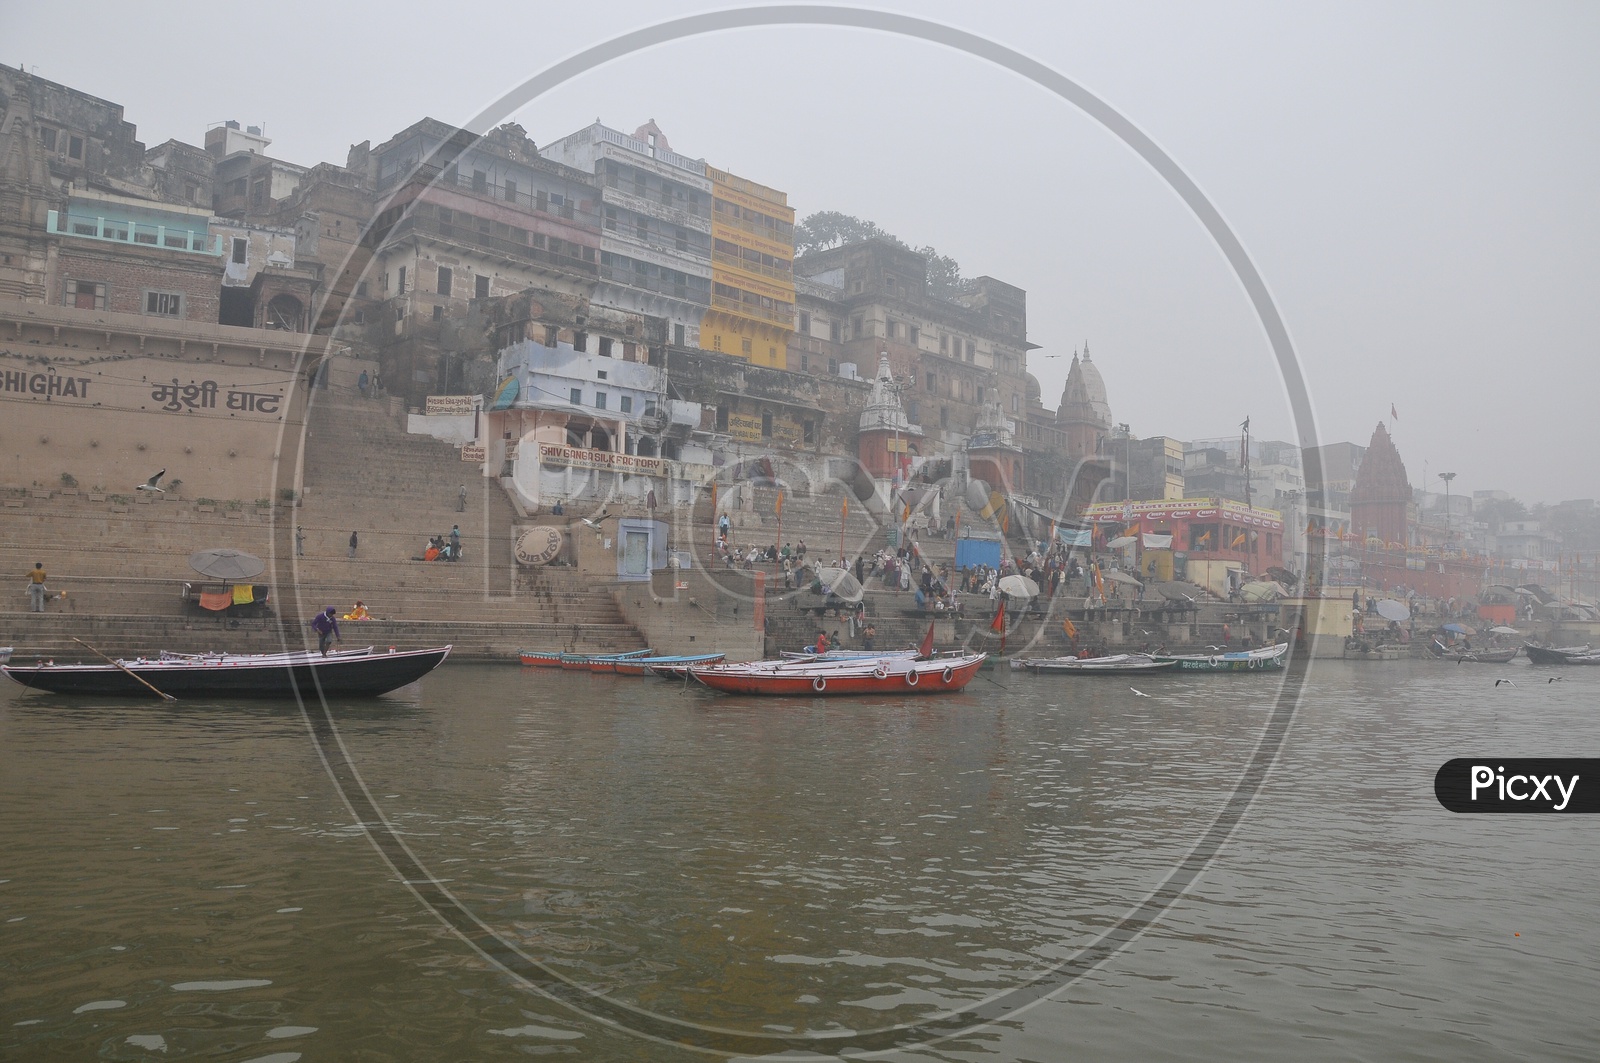 Boats in The Ghats of Varanasi On River Ganga